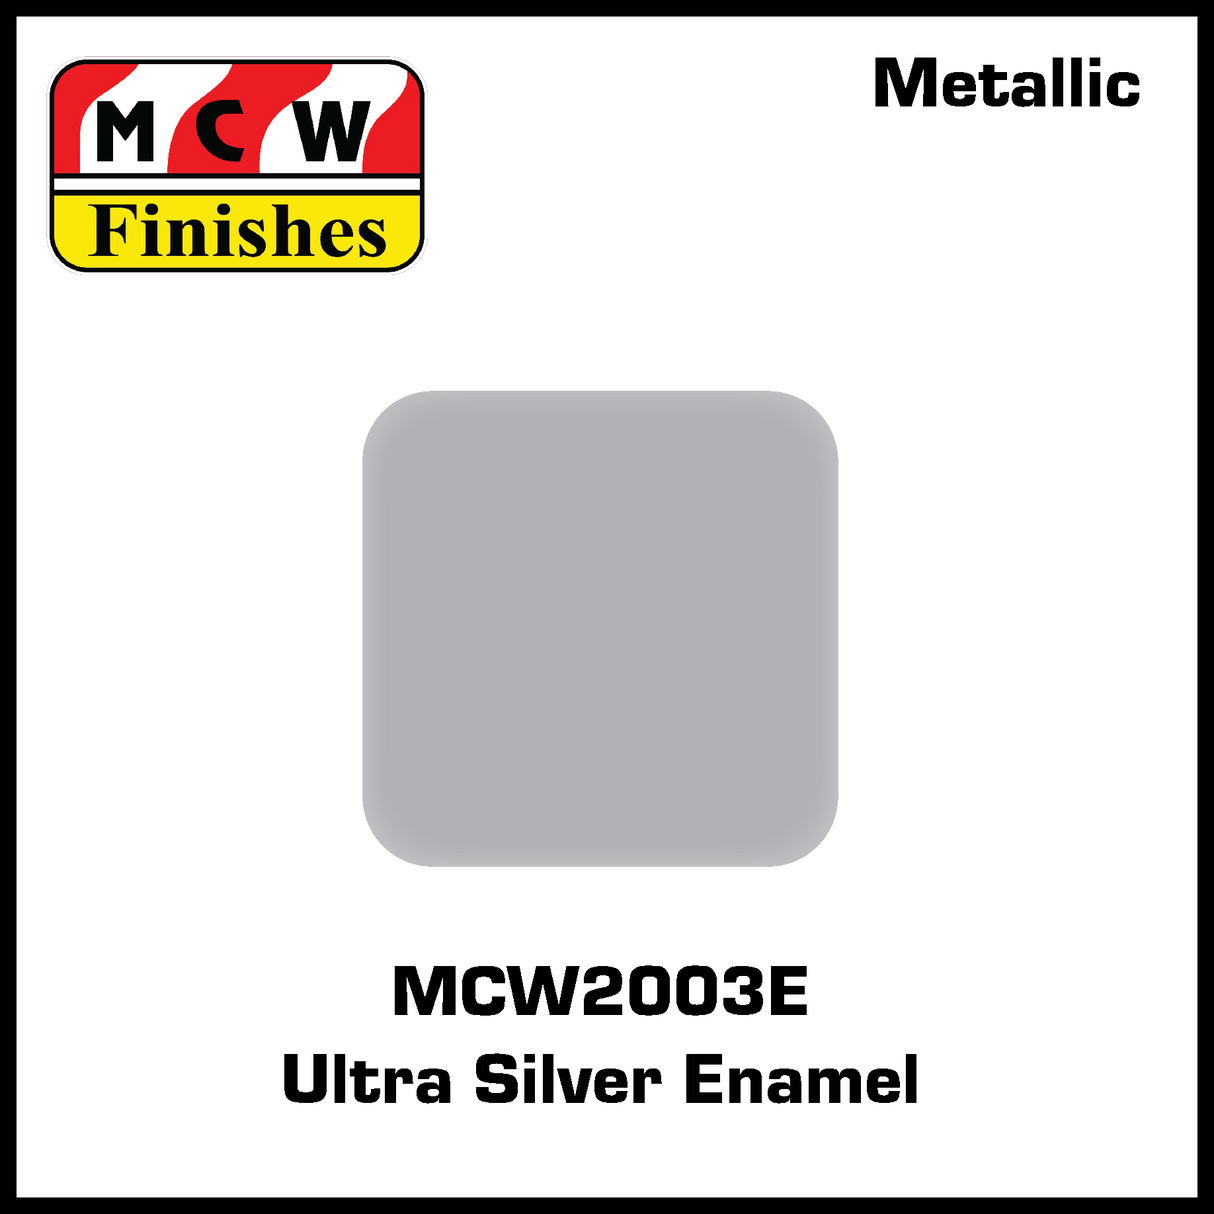 MCW Finishes 2003E Ultra Silver Enamel